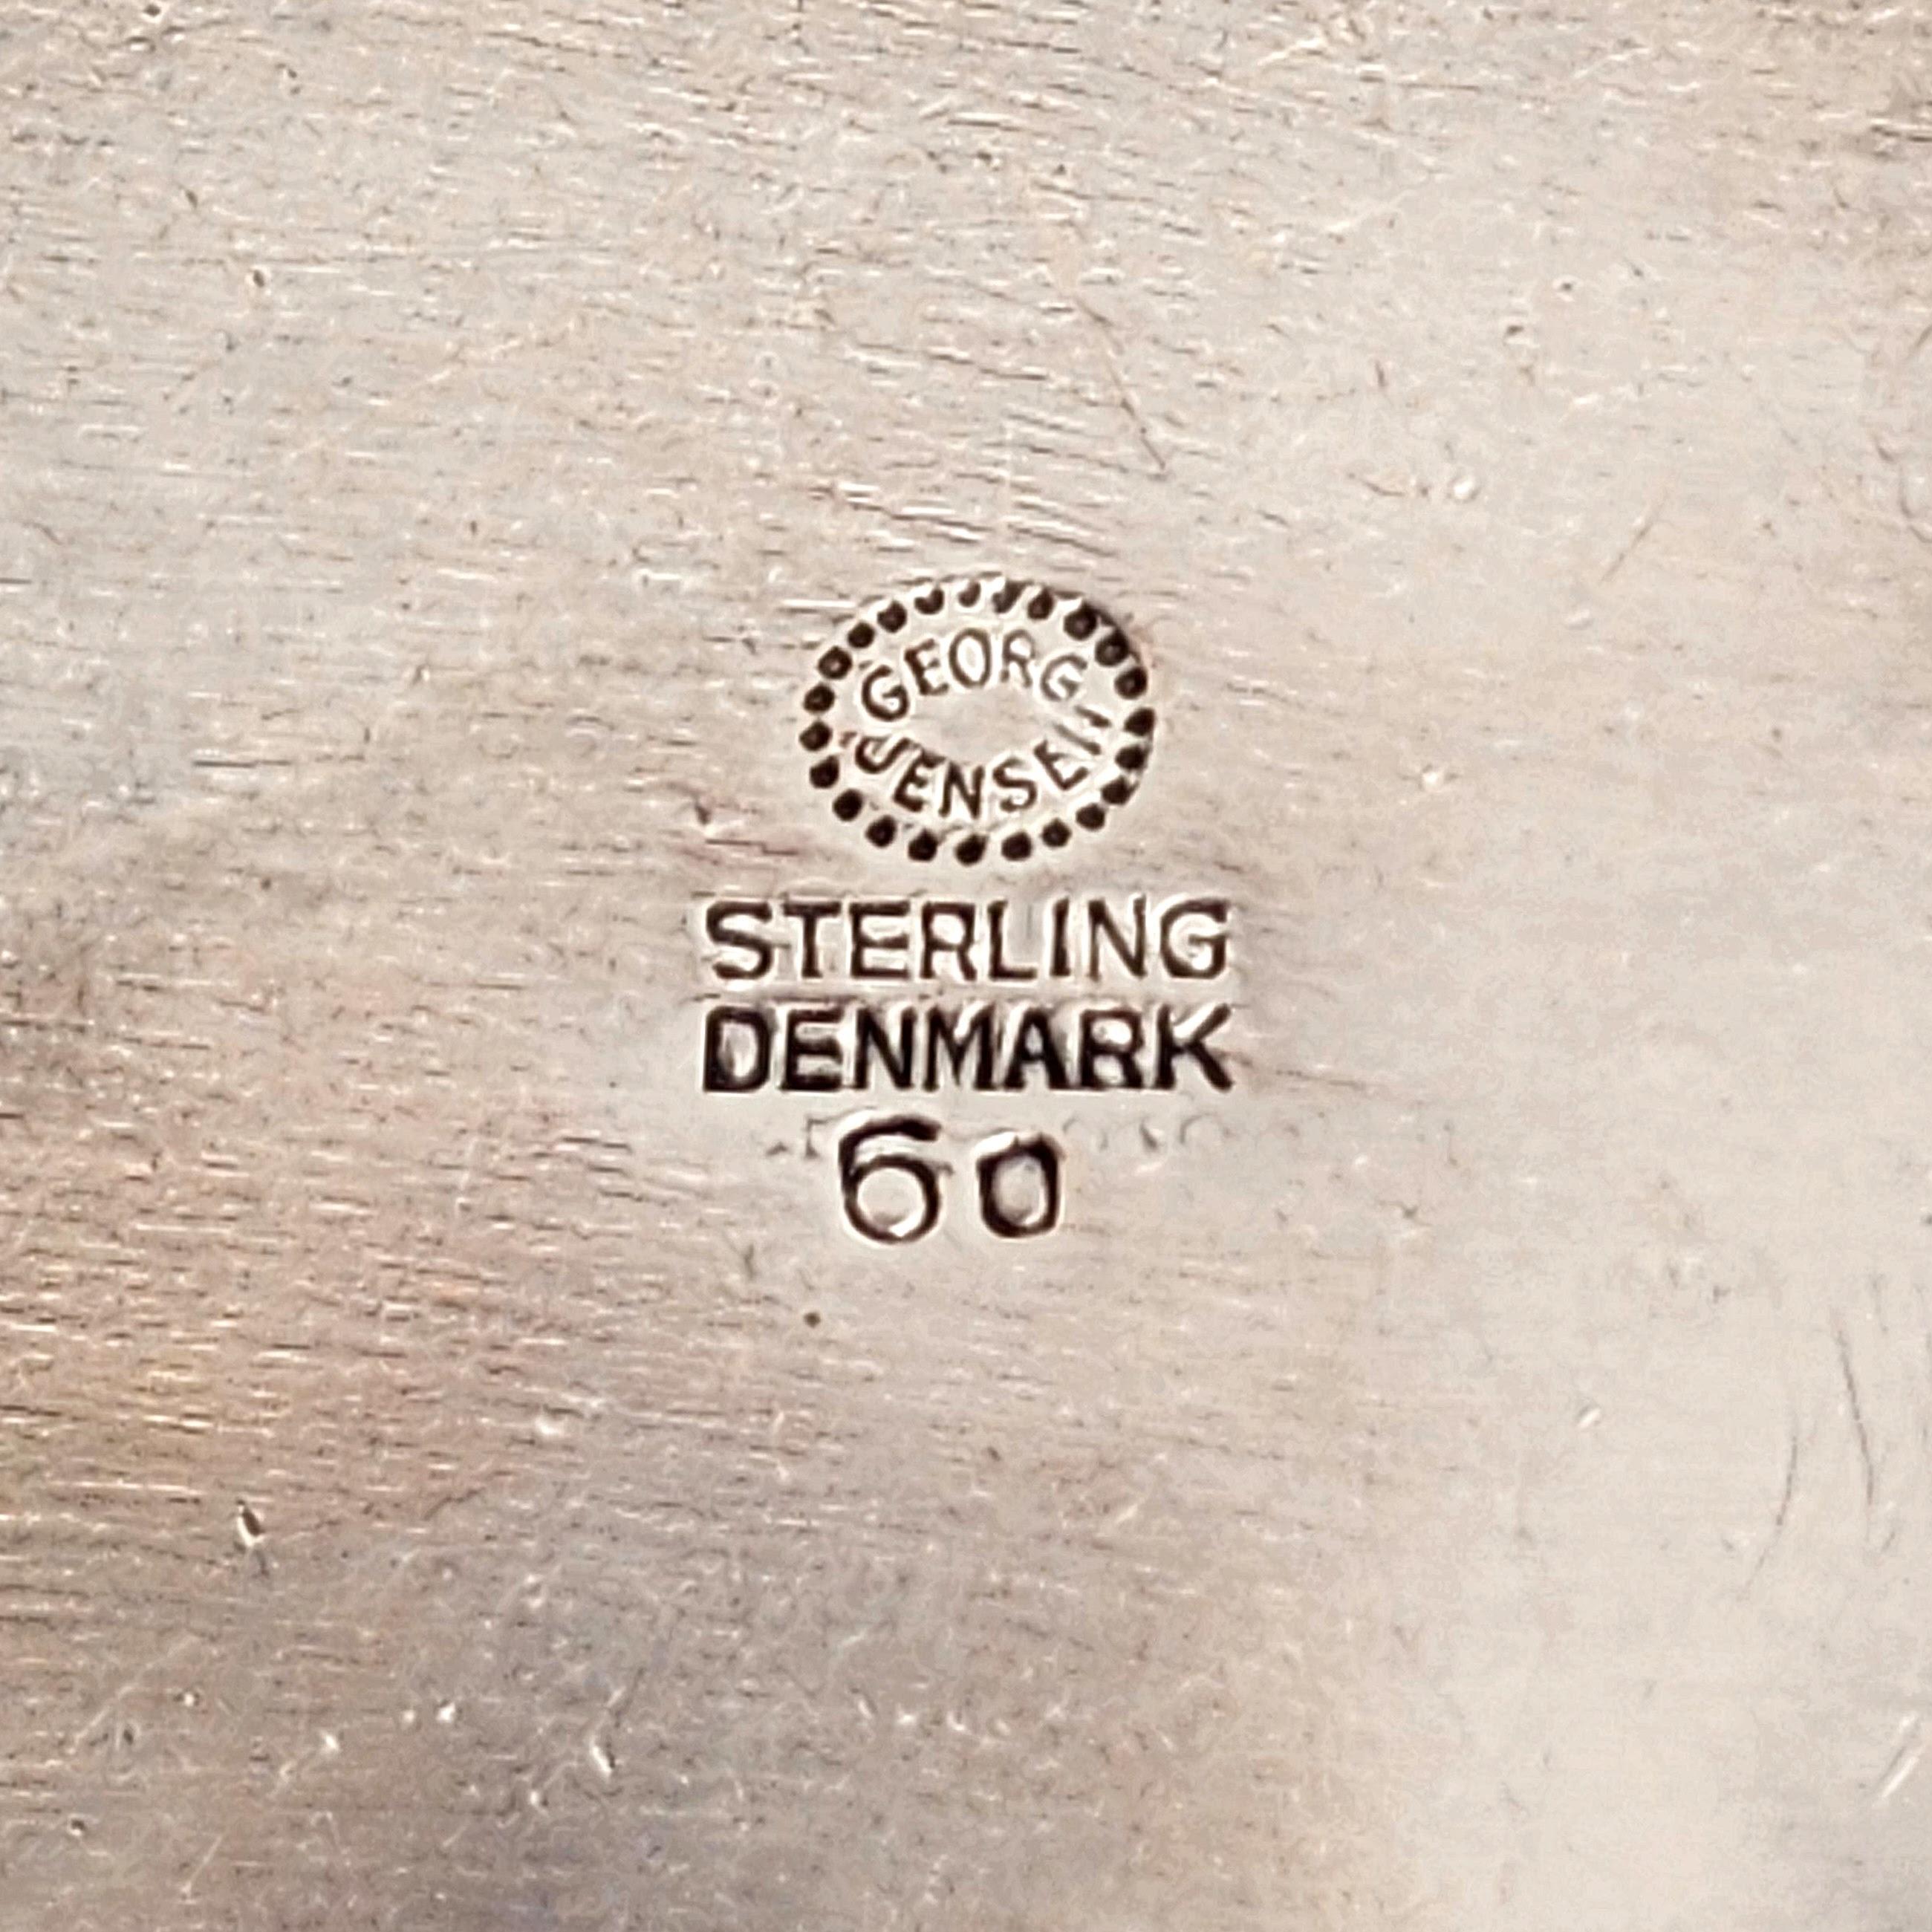 Georg Jensen Denmark Sterling Silver 60 Oval Dome Leaf Pin/Brooch #14682 For Sale 2